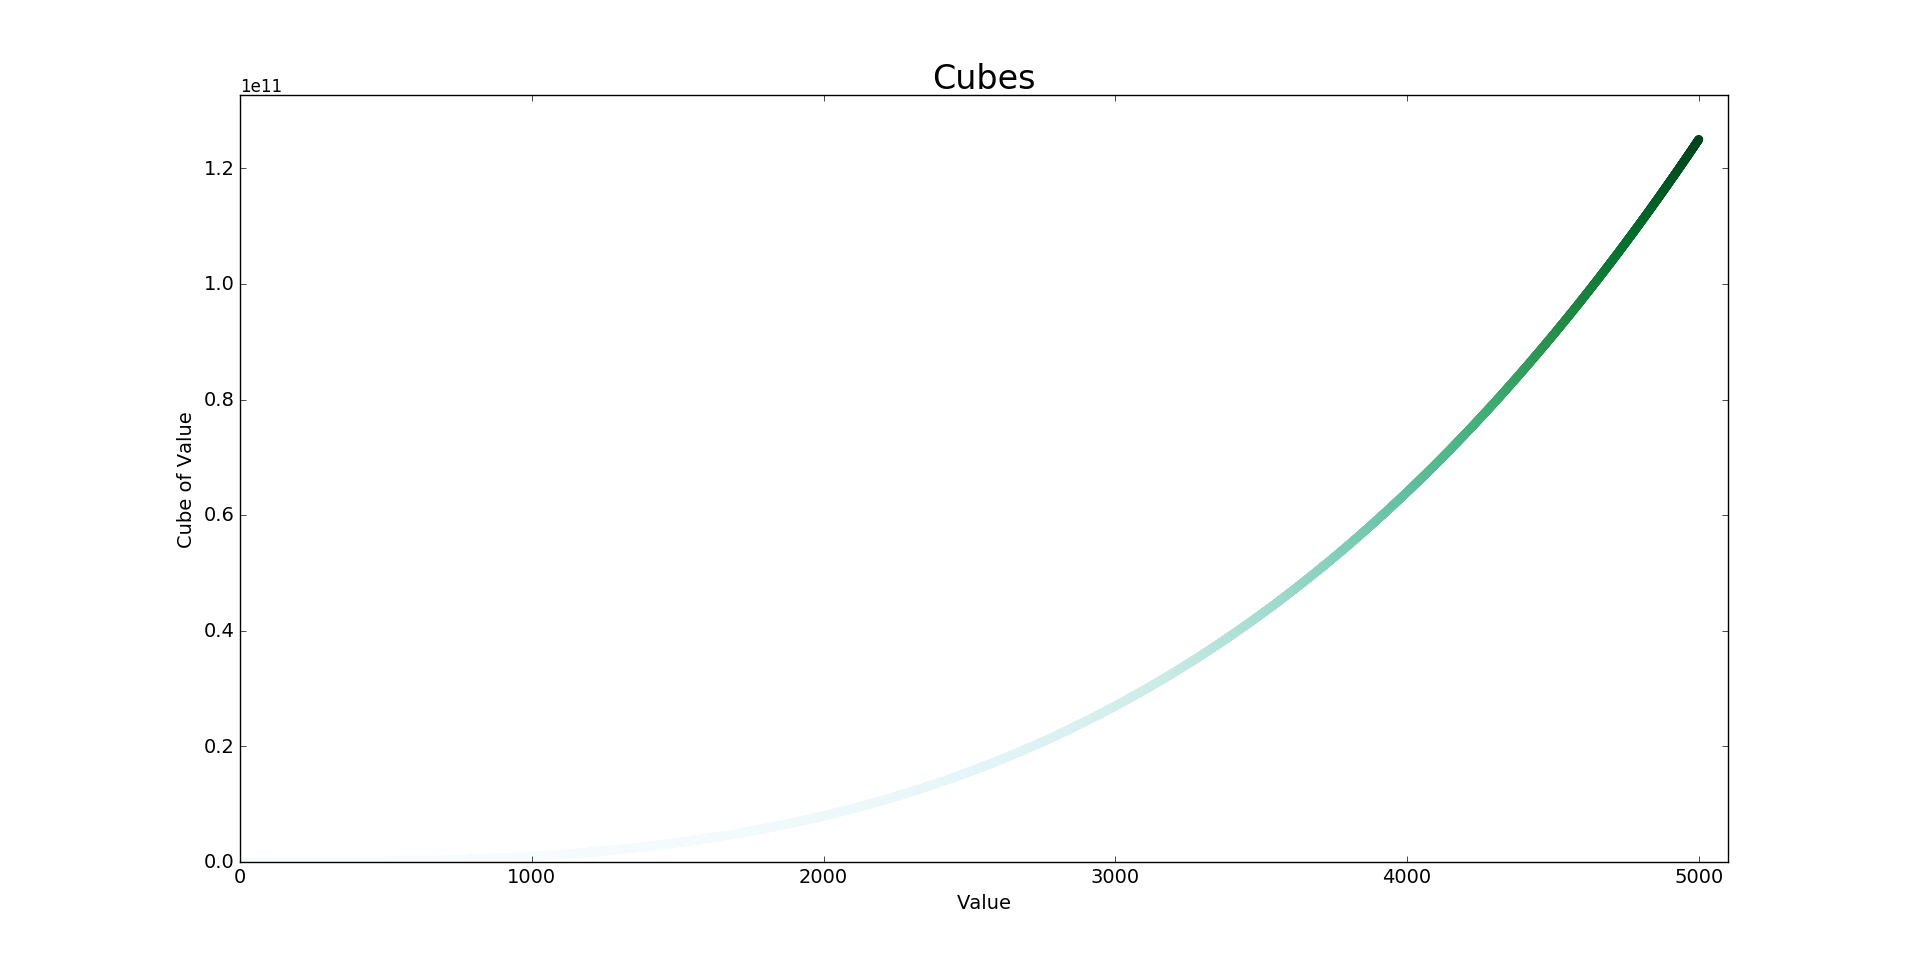 Plot showing 5000 cubes, using a colormap